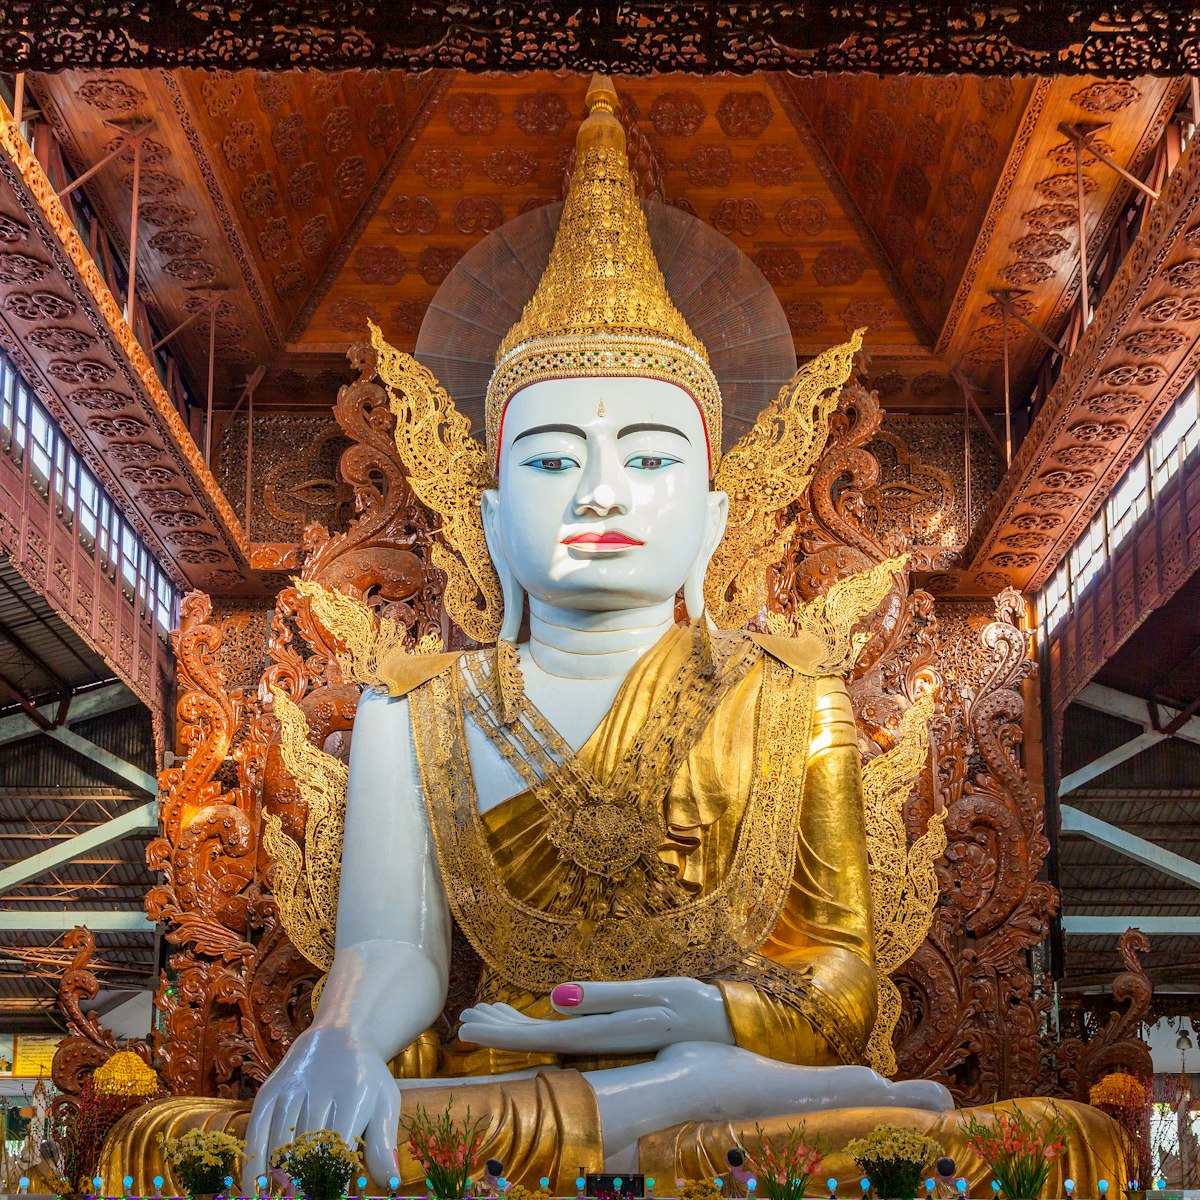 The Budda sculpture in Ngahtatgyi Paya, Yangon, Myanmar.
